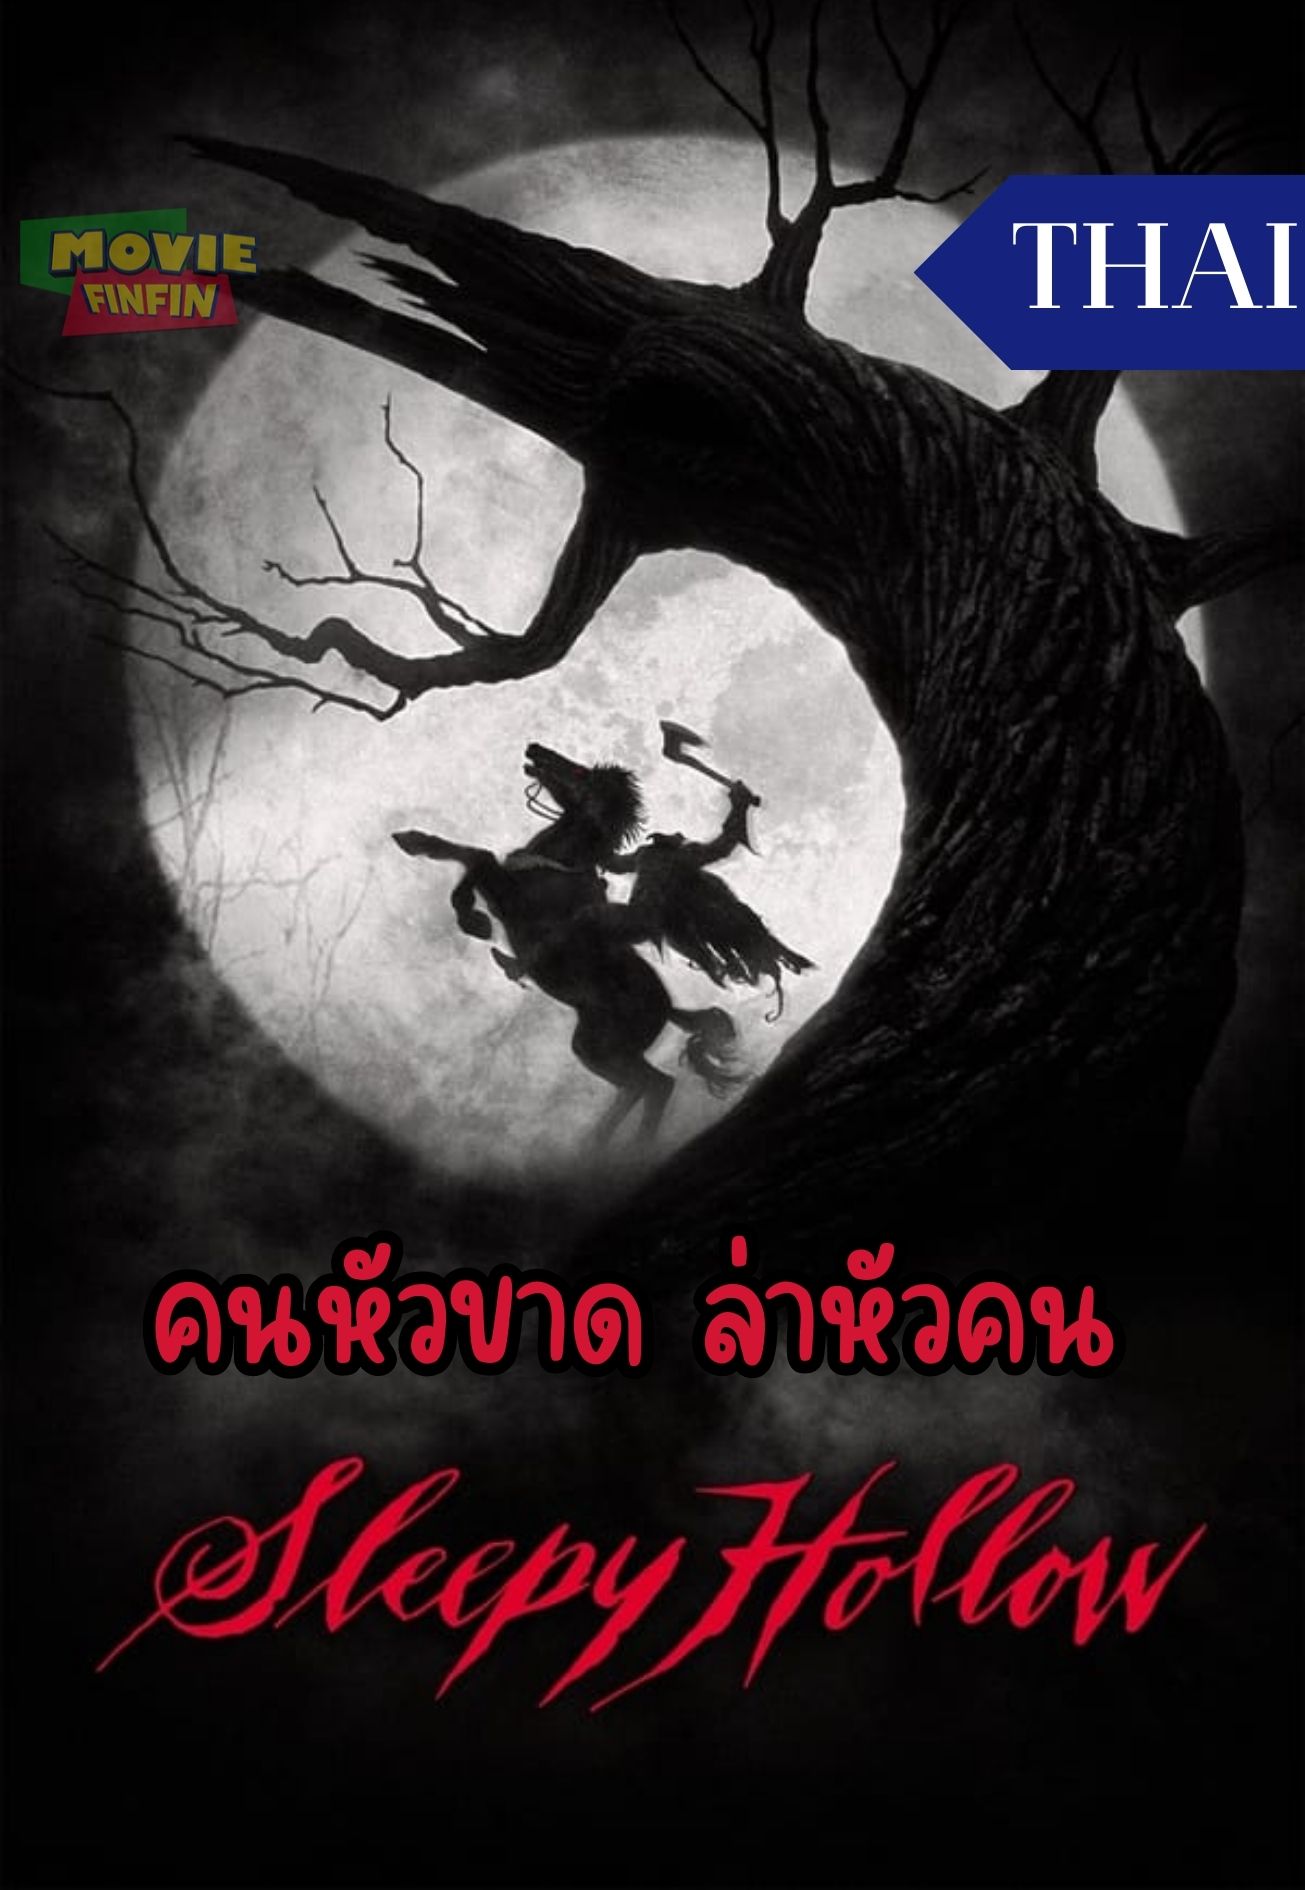 Sleepy Hollow (1999) คนหัวขาด ล่าหัวคน 